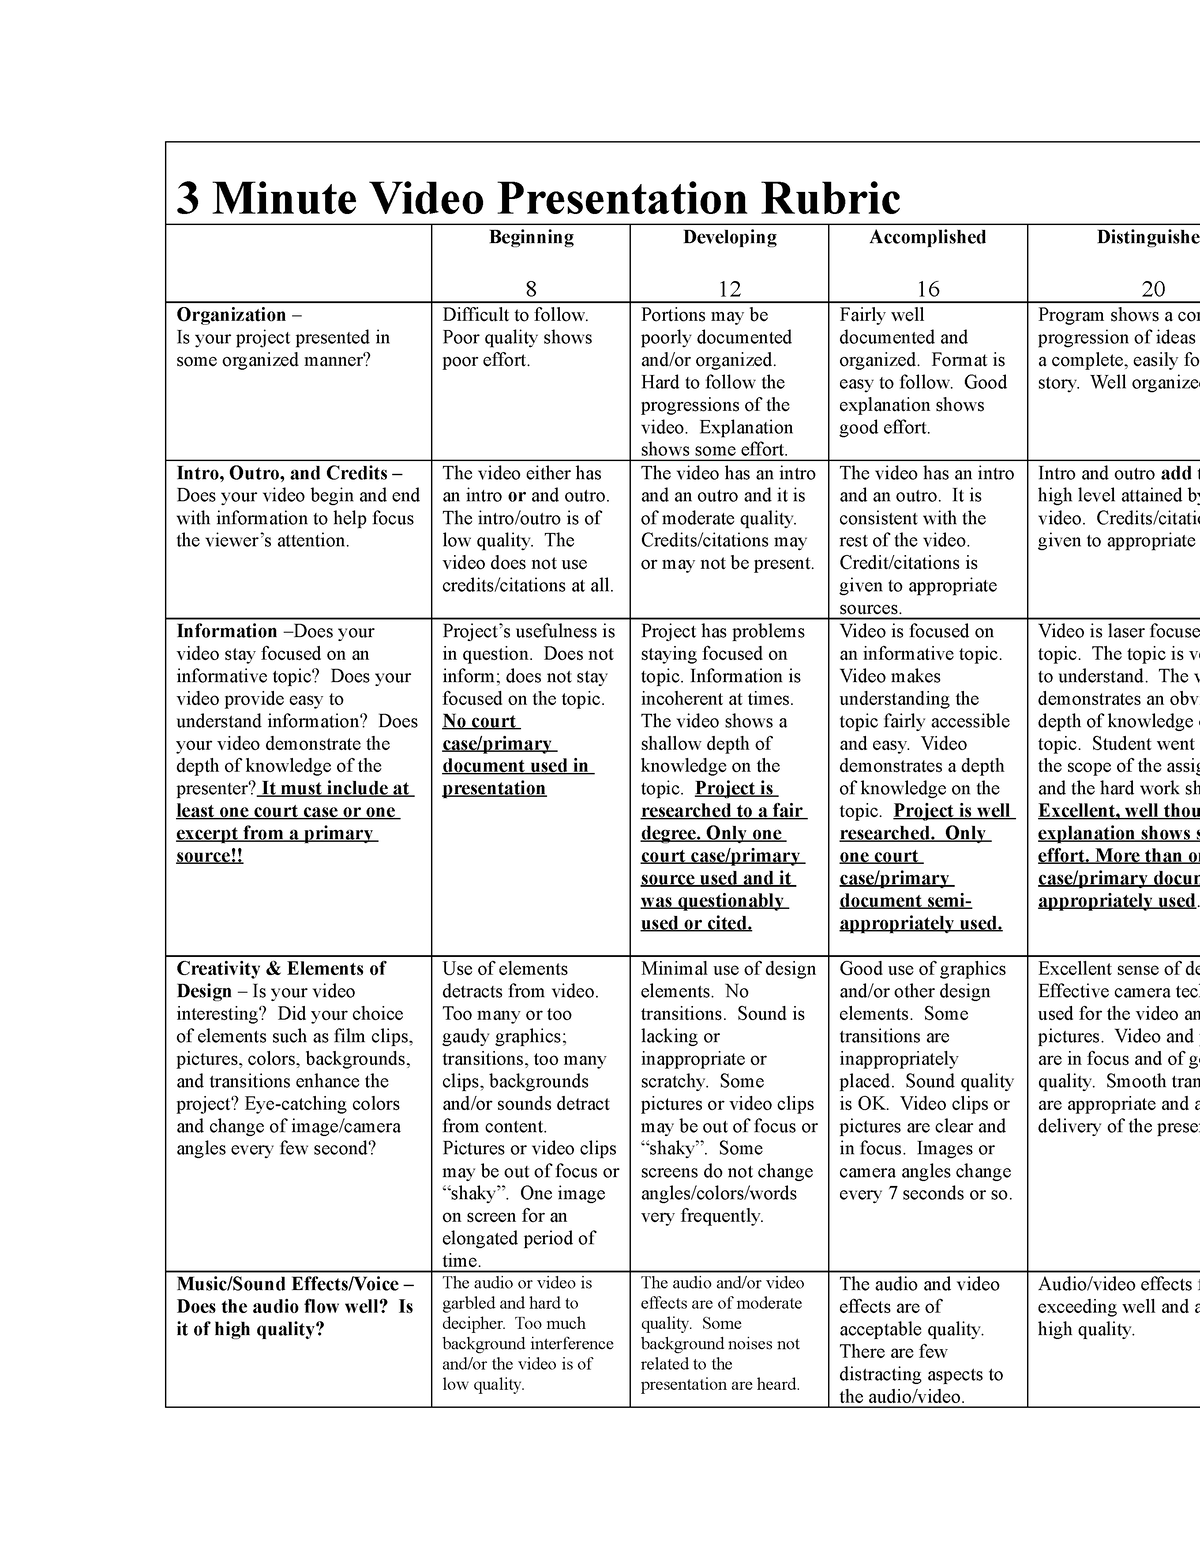 rubric for video presentation doc